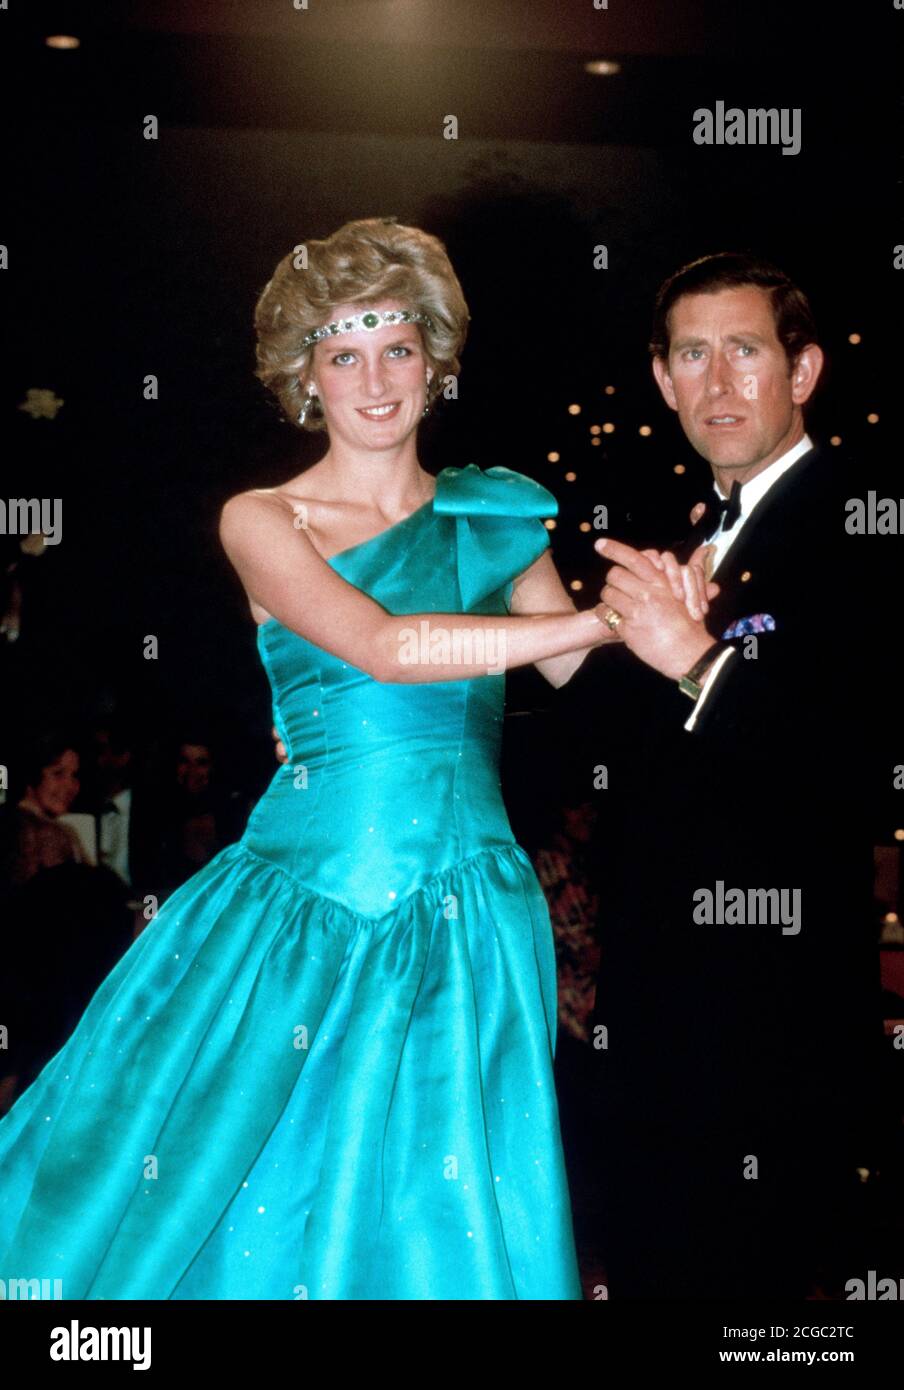 Princess Diana Prince Charles Tour Stockfotos Und Bilder Kaufen Alamy